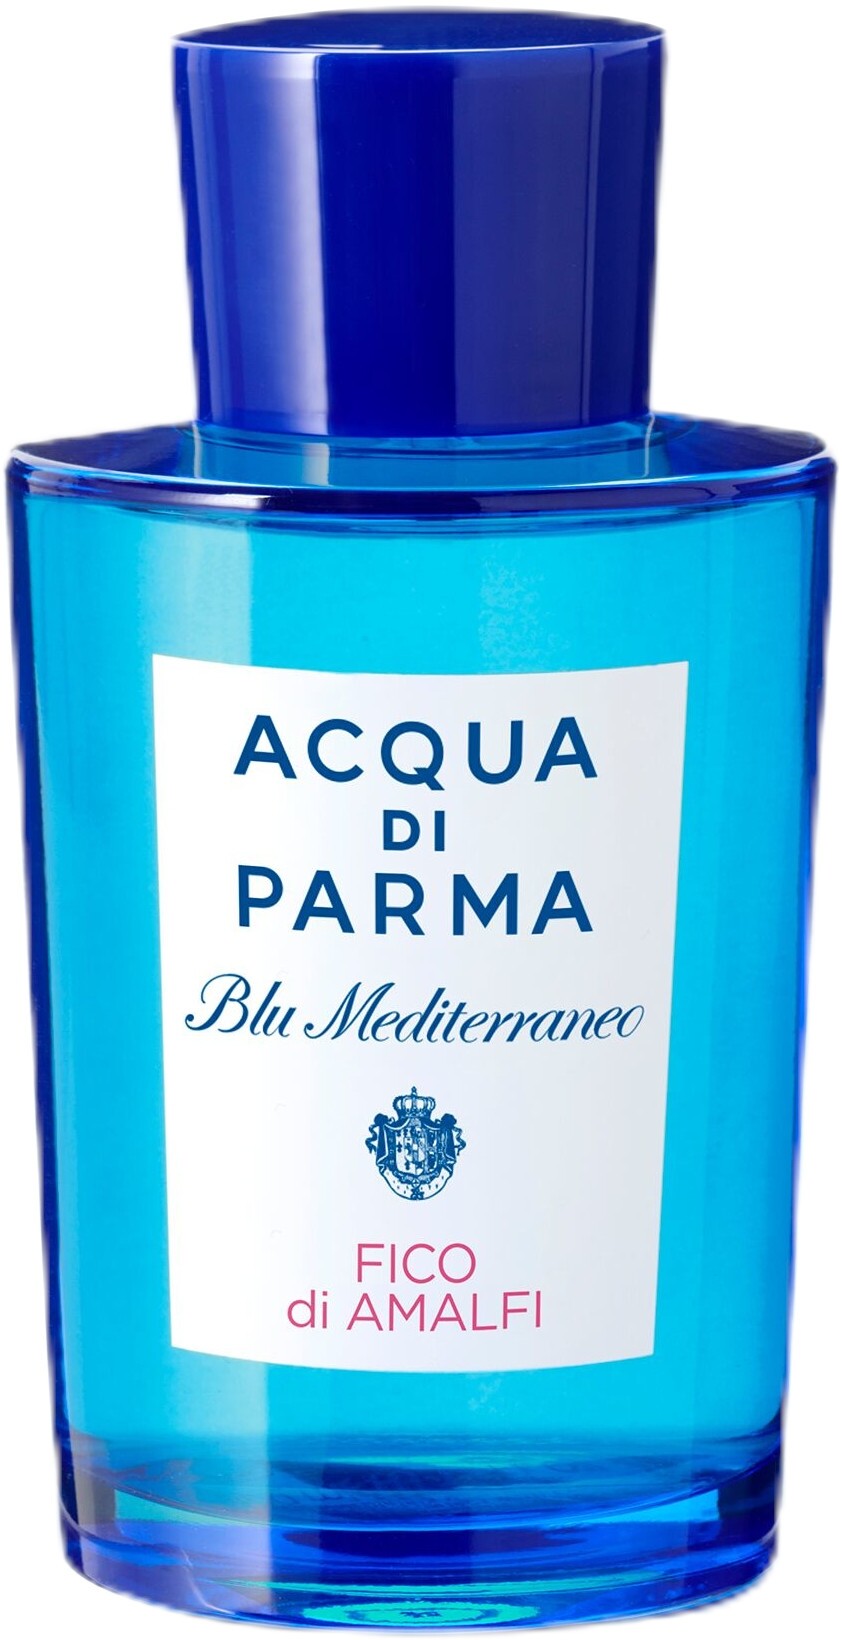 Acqua di Parma Blu Mediterraneo Fico di Amalfi Eau de Toilette Spray 180ml